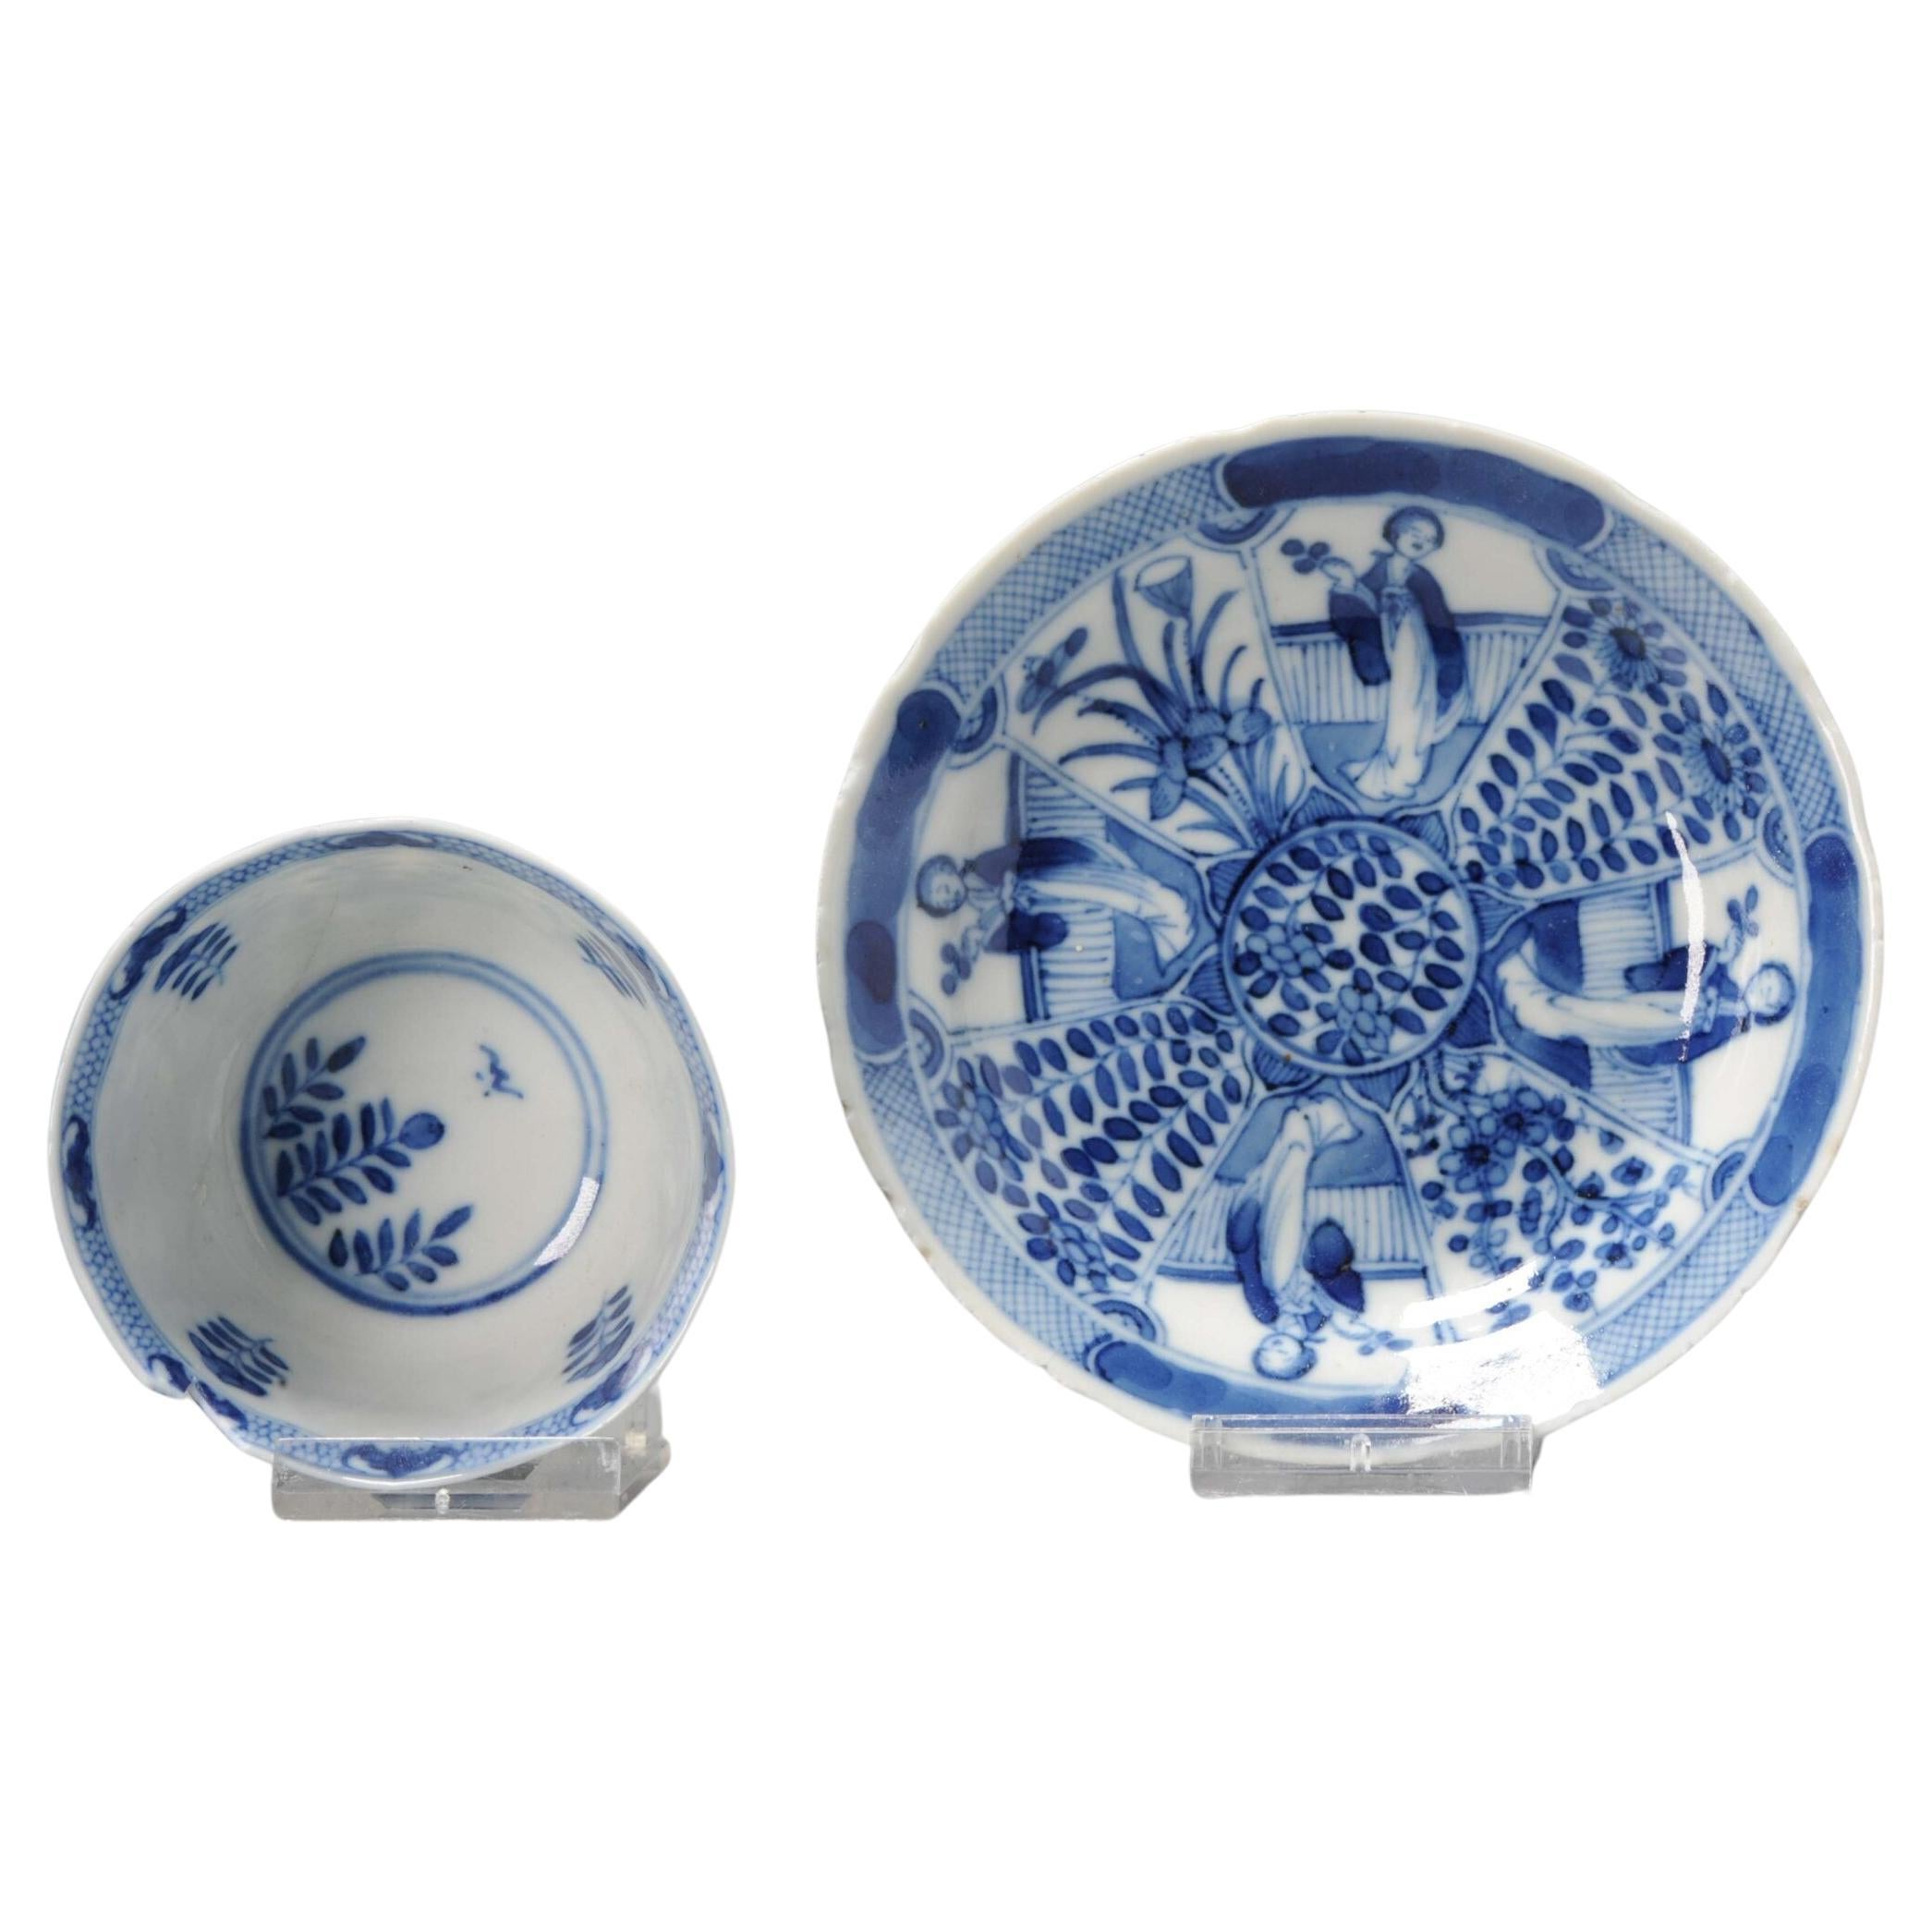 Why was Chinese Kangxi porcelain popular?